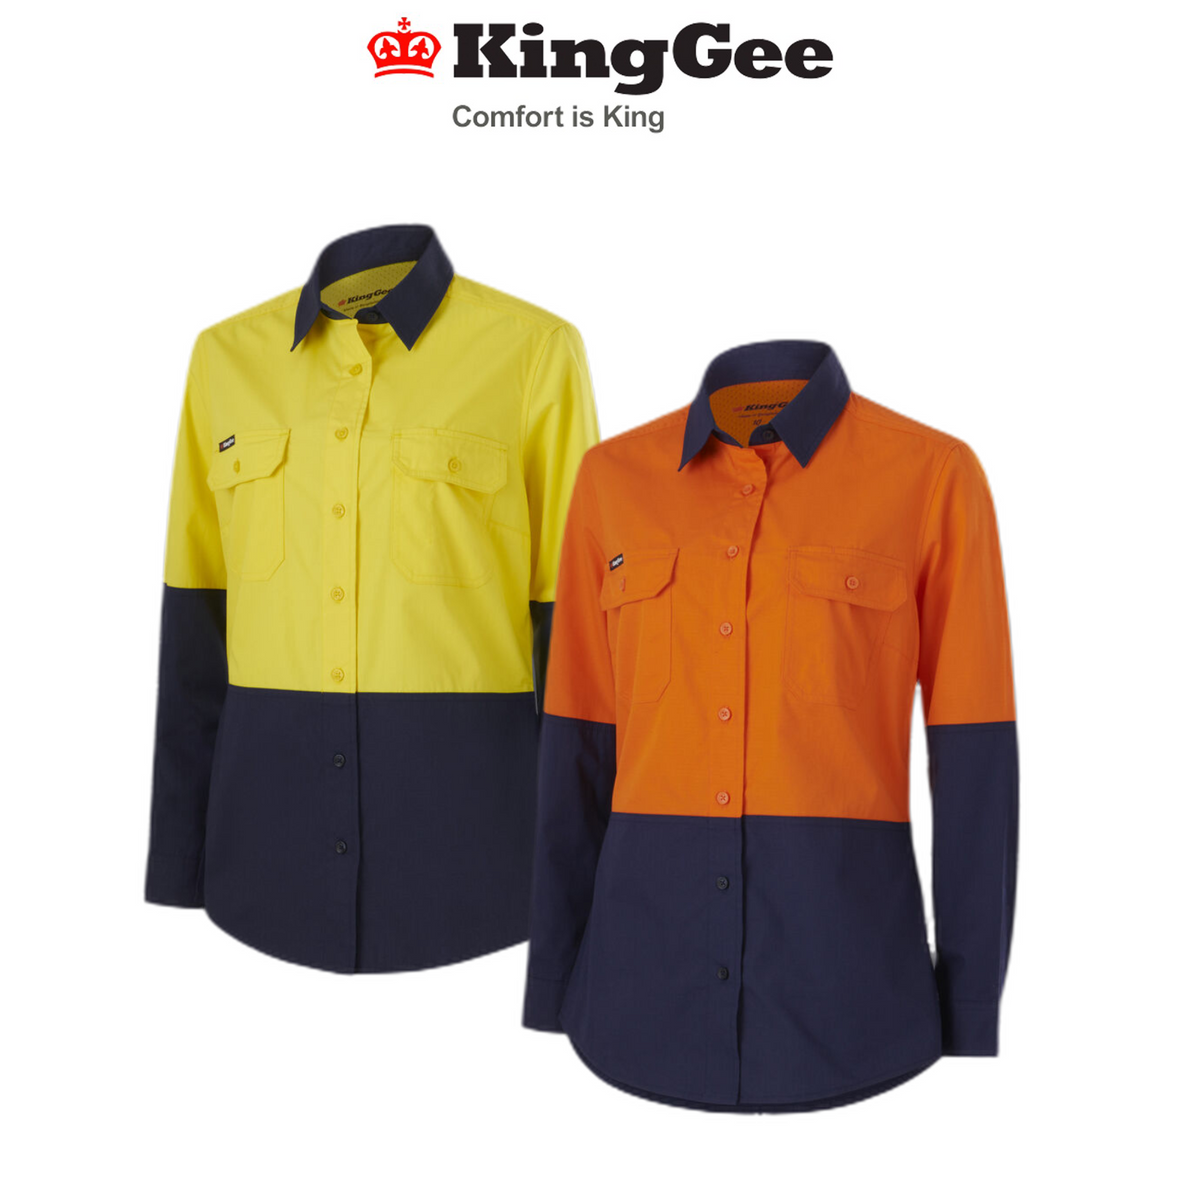 KingGee Womens WORKCOOL Vented Spliced Lightweight Pocket Cool Shirt L/S K44226